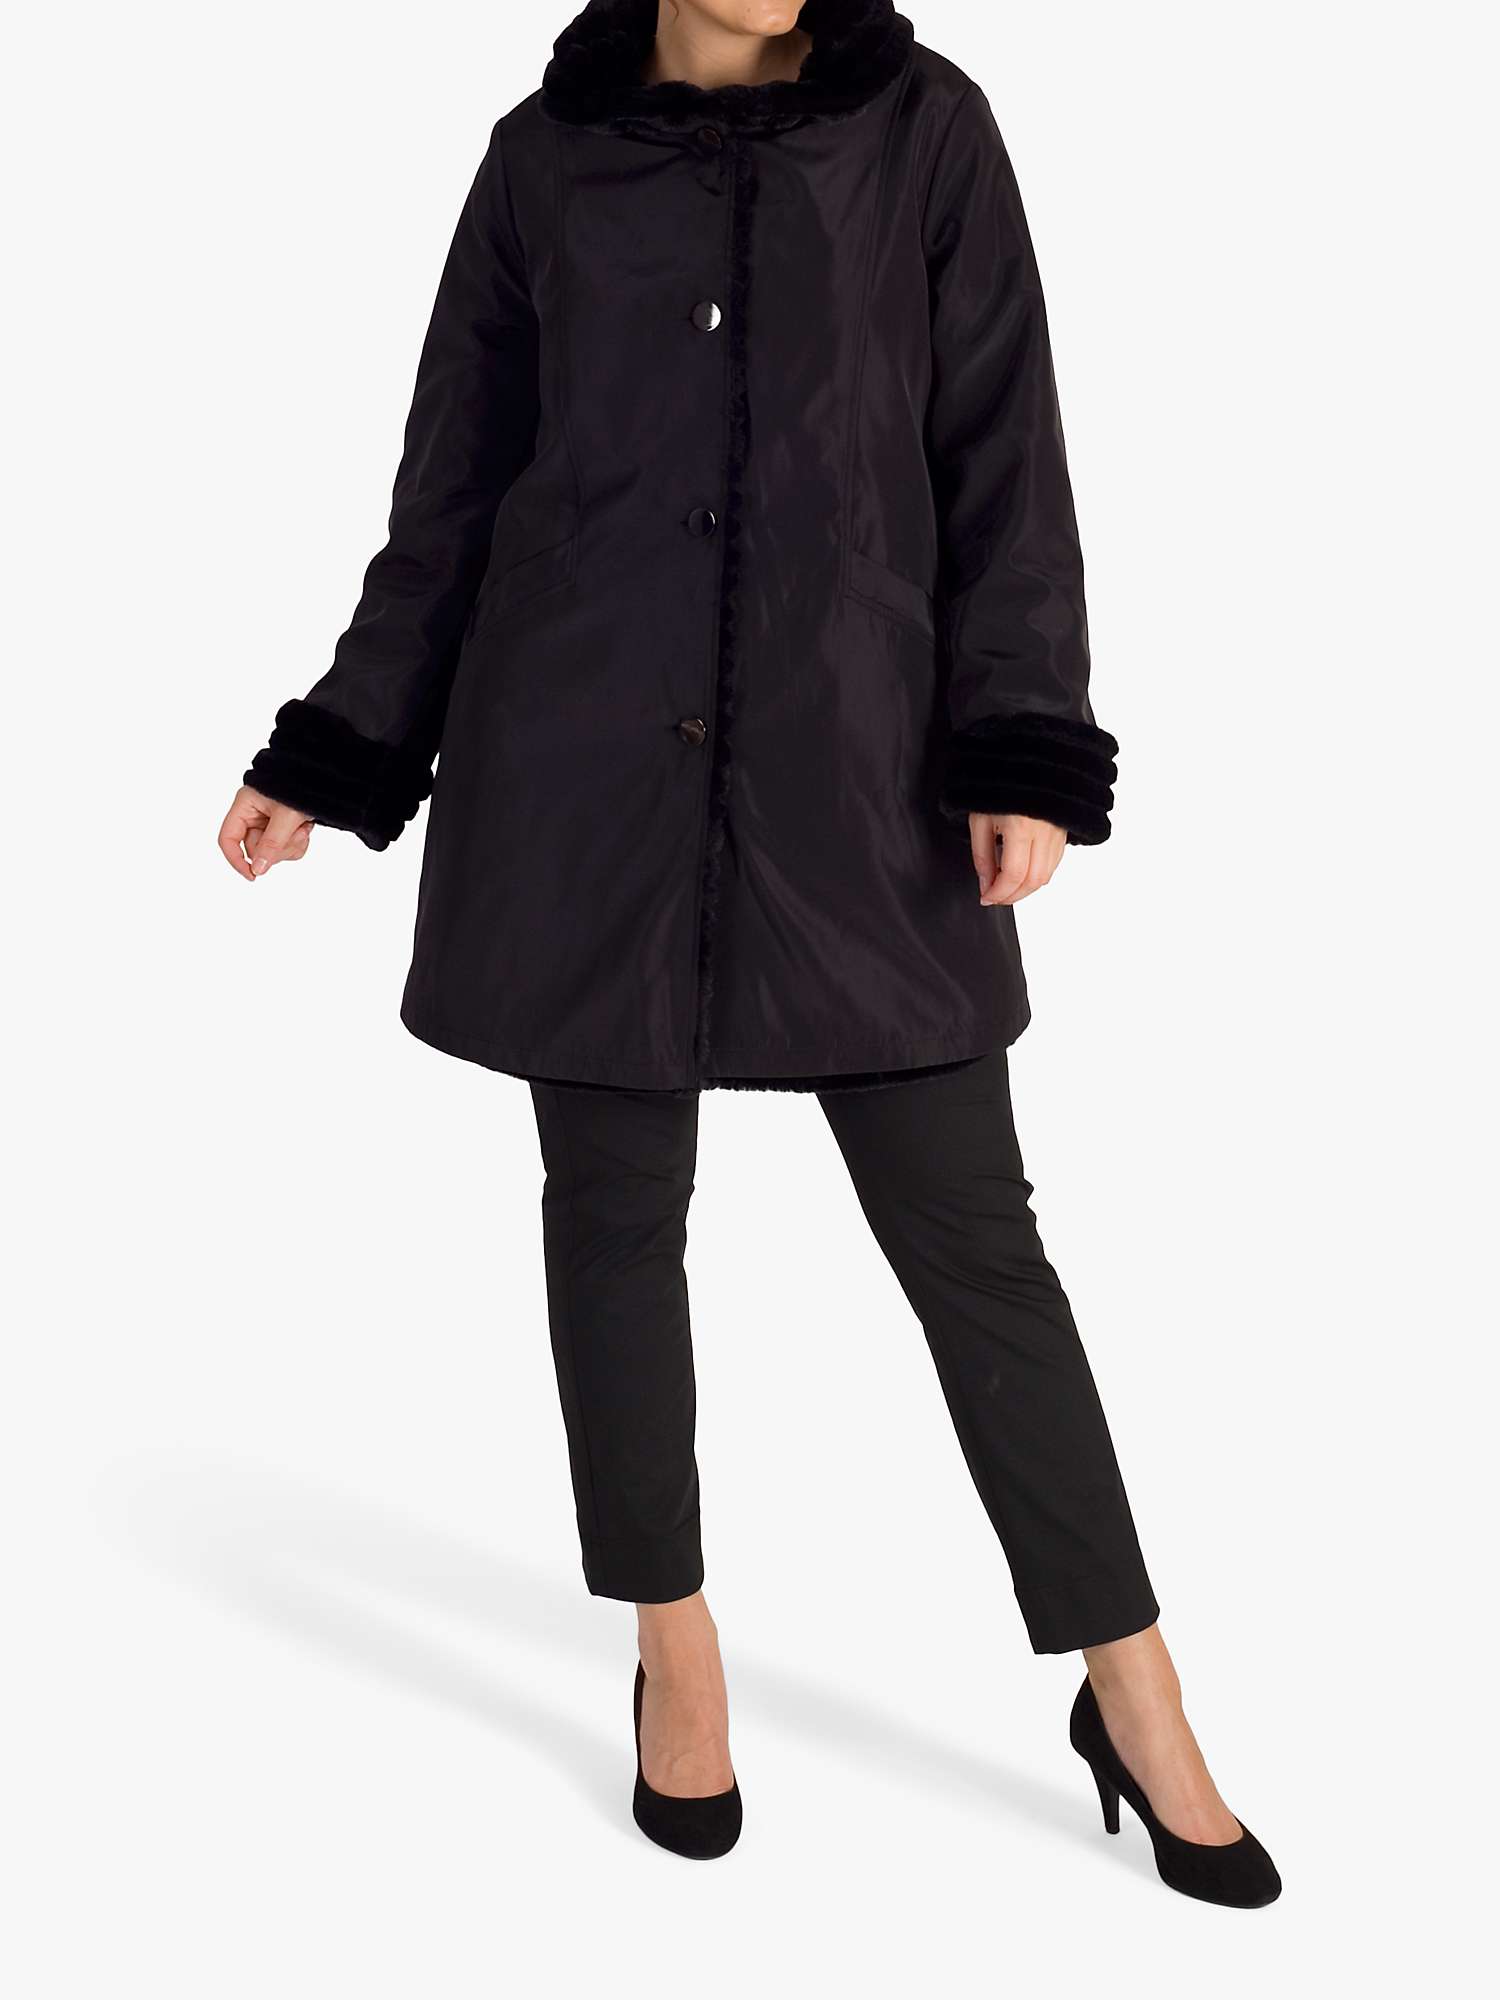 chesca Faux Fur Lined Reversible Coat, Black at John Lewis  Partners